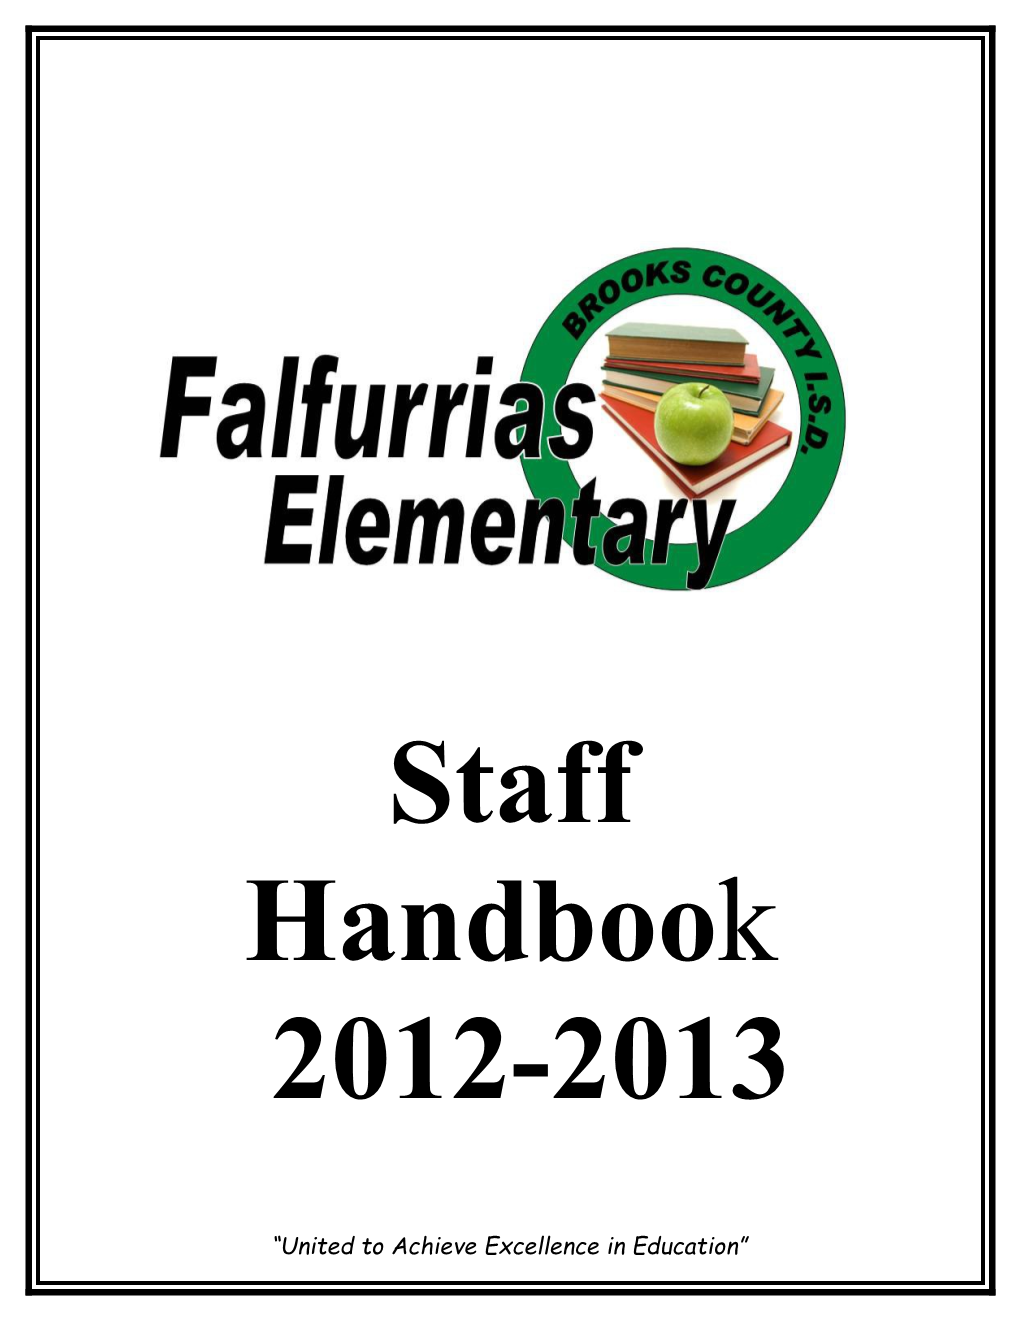 Falfurrias Elementary School